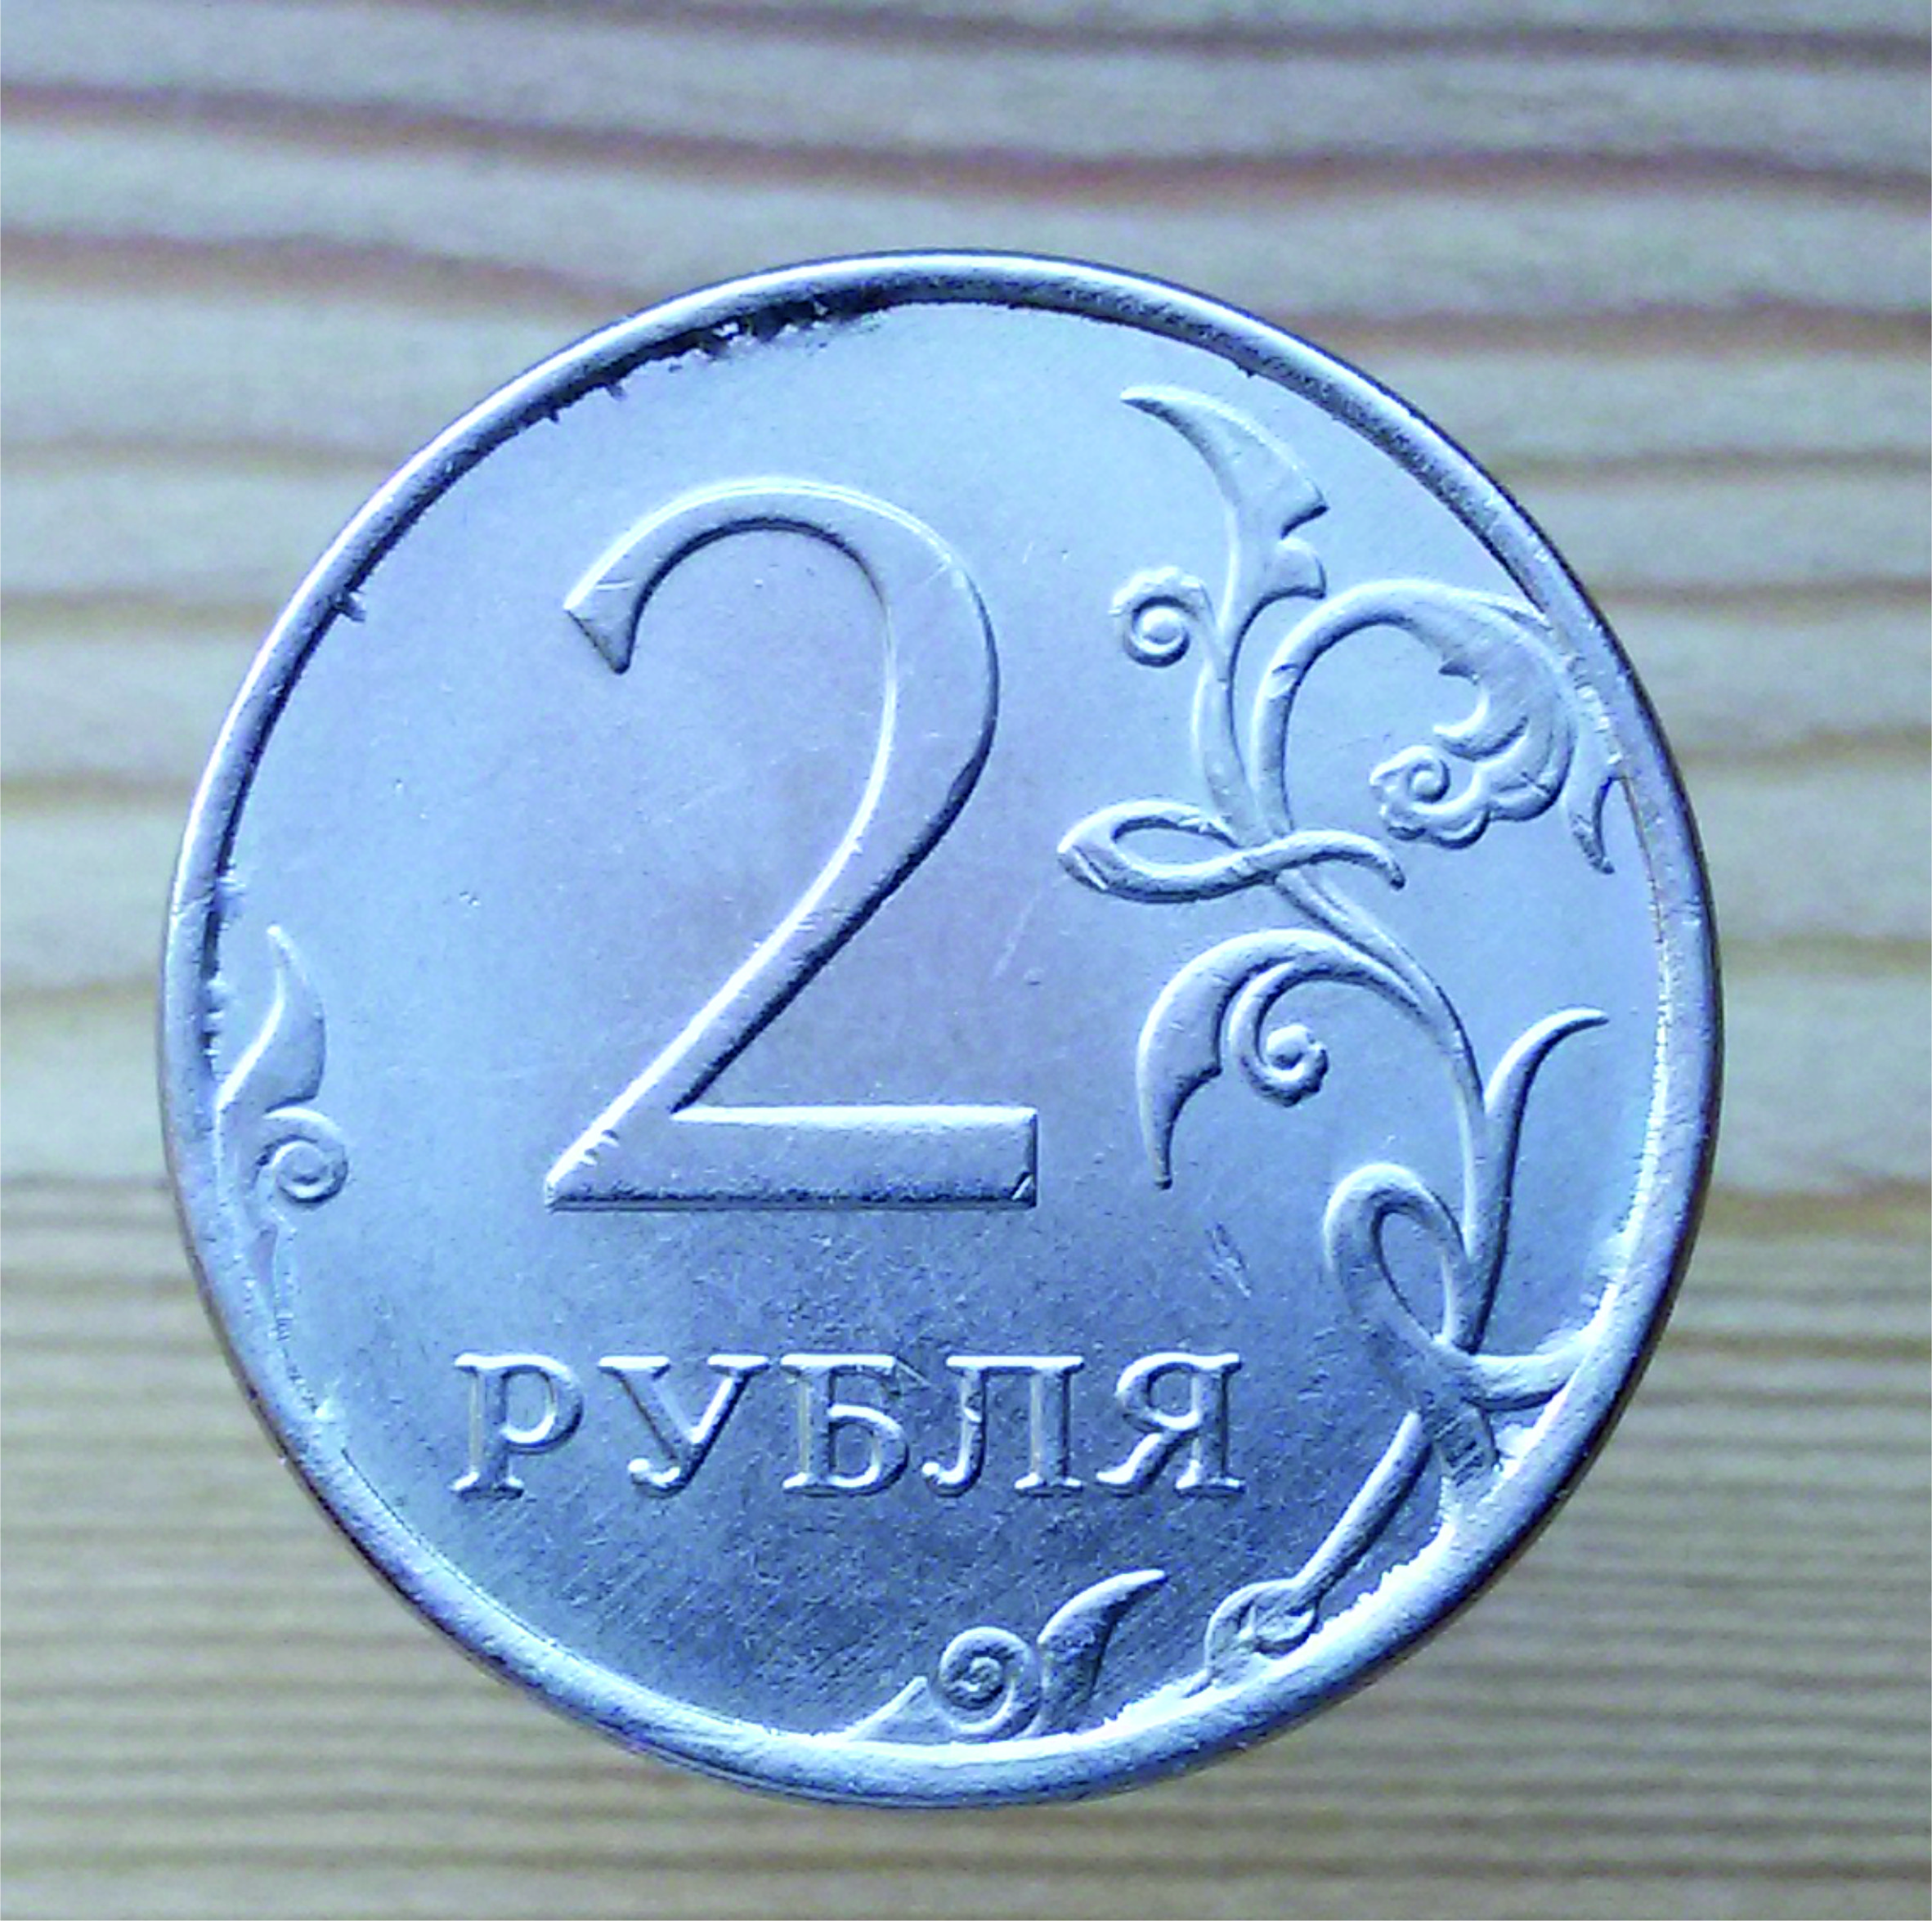 6 в рублях в россии. 2 Рубля. Монета 2 руб. Монета два рубля. 2 Рубля с изображением.